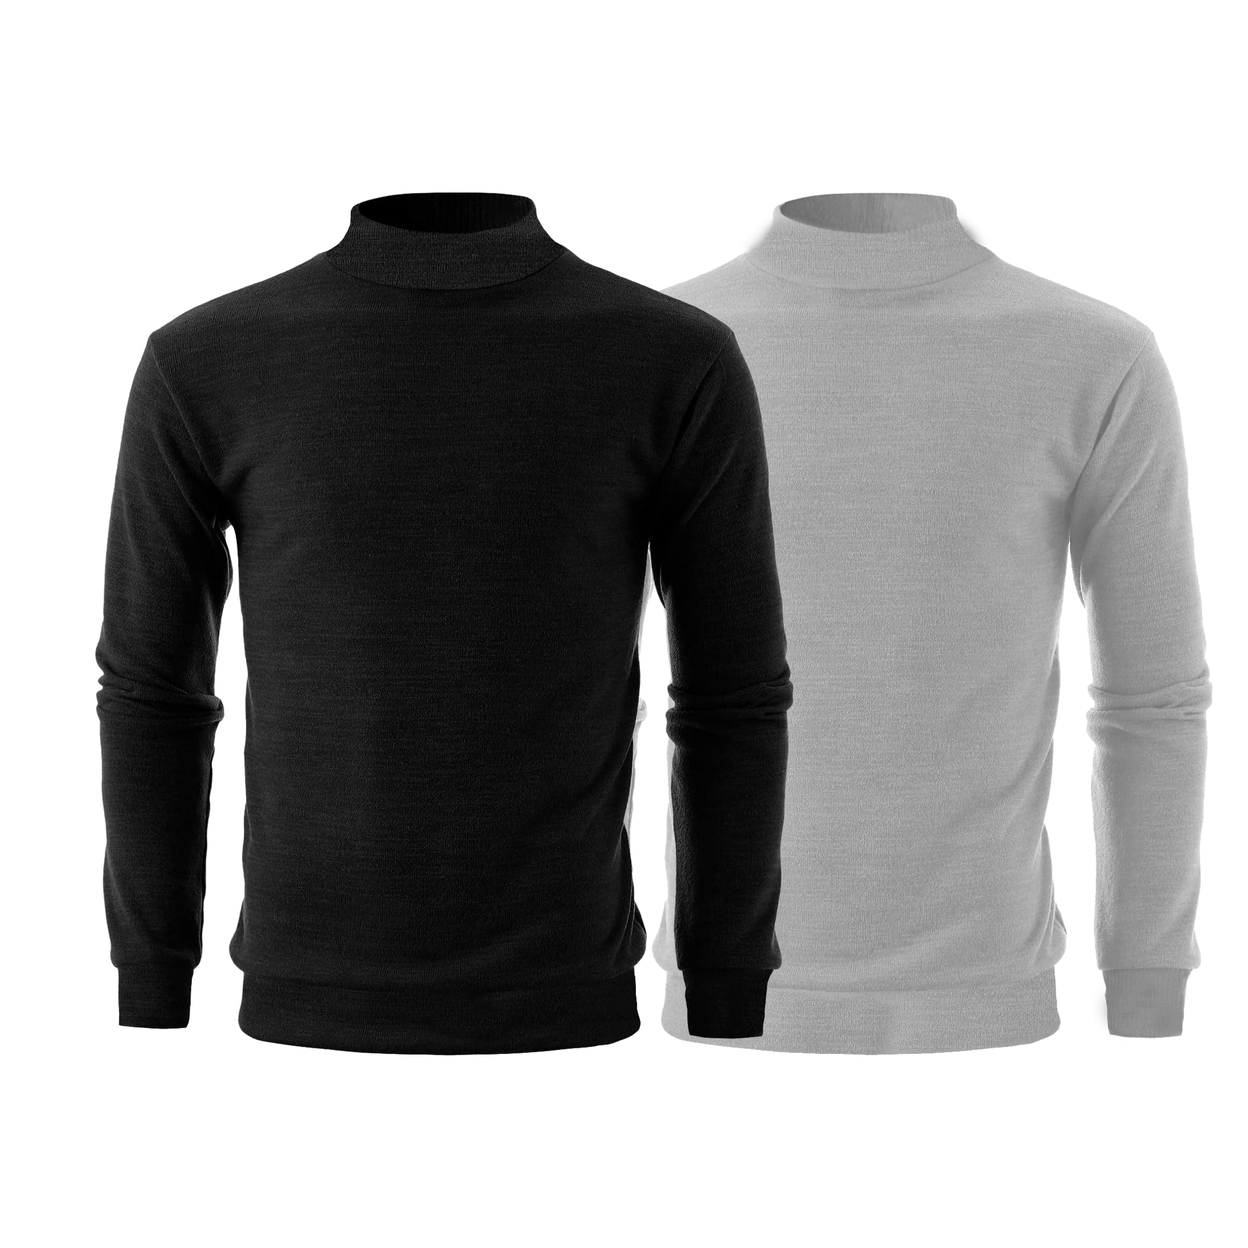 2-Pack: Men's Winter Warm Cozy Knit Slim Fit Mock Neck Sweater - Black &grey, Xx-large